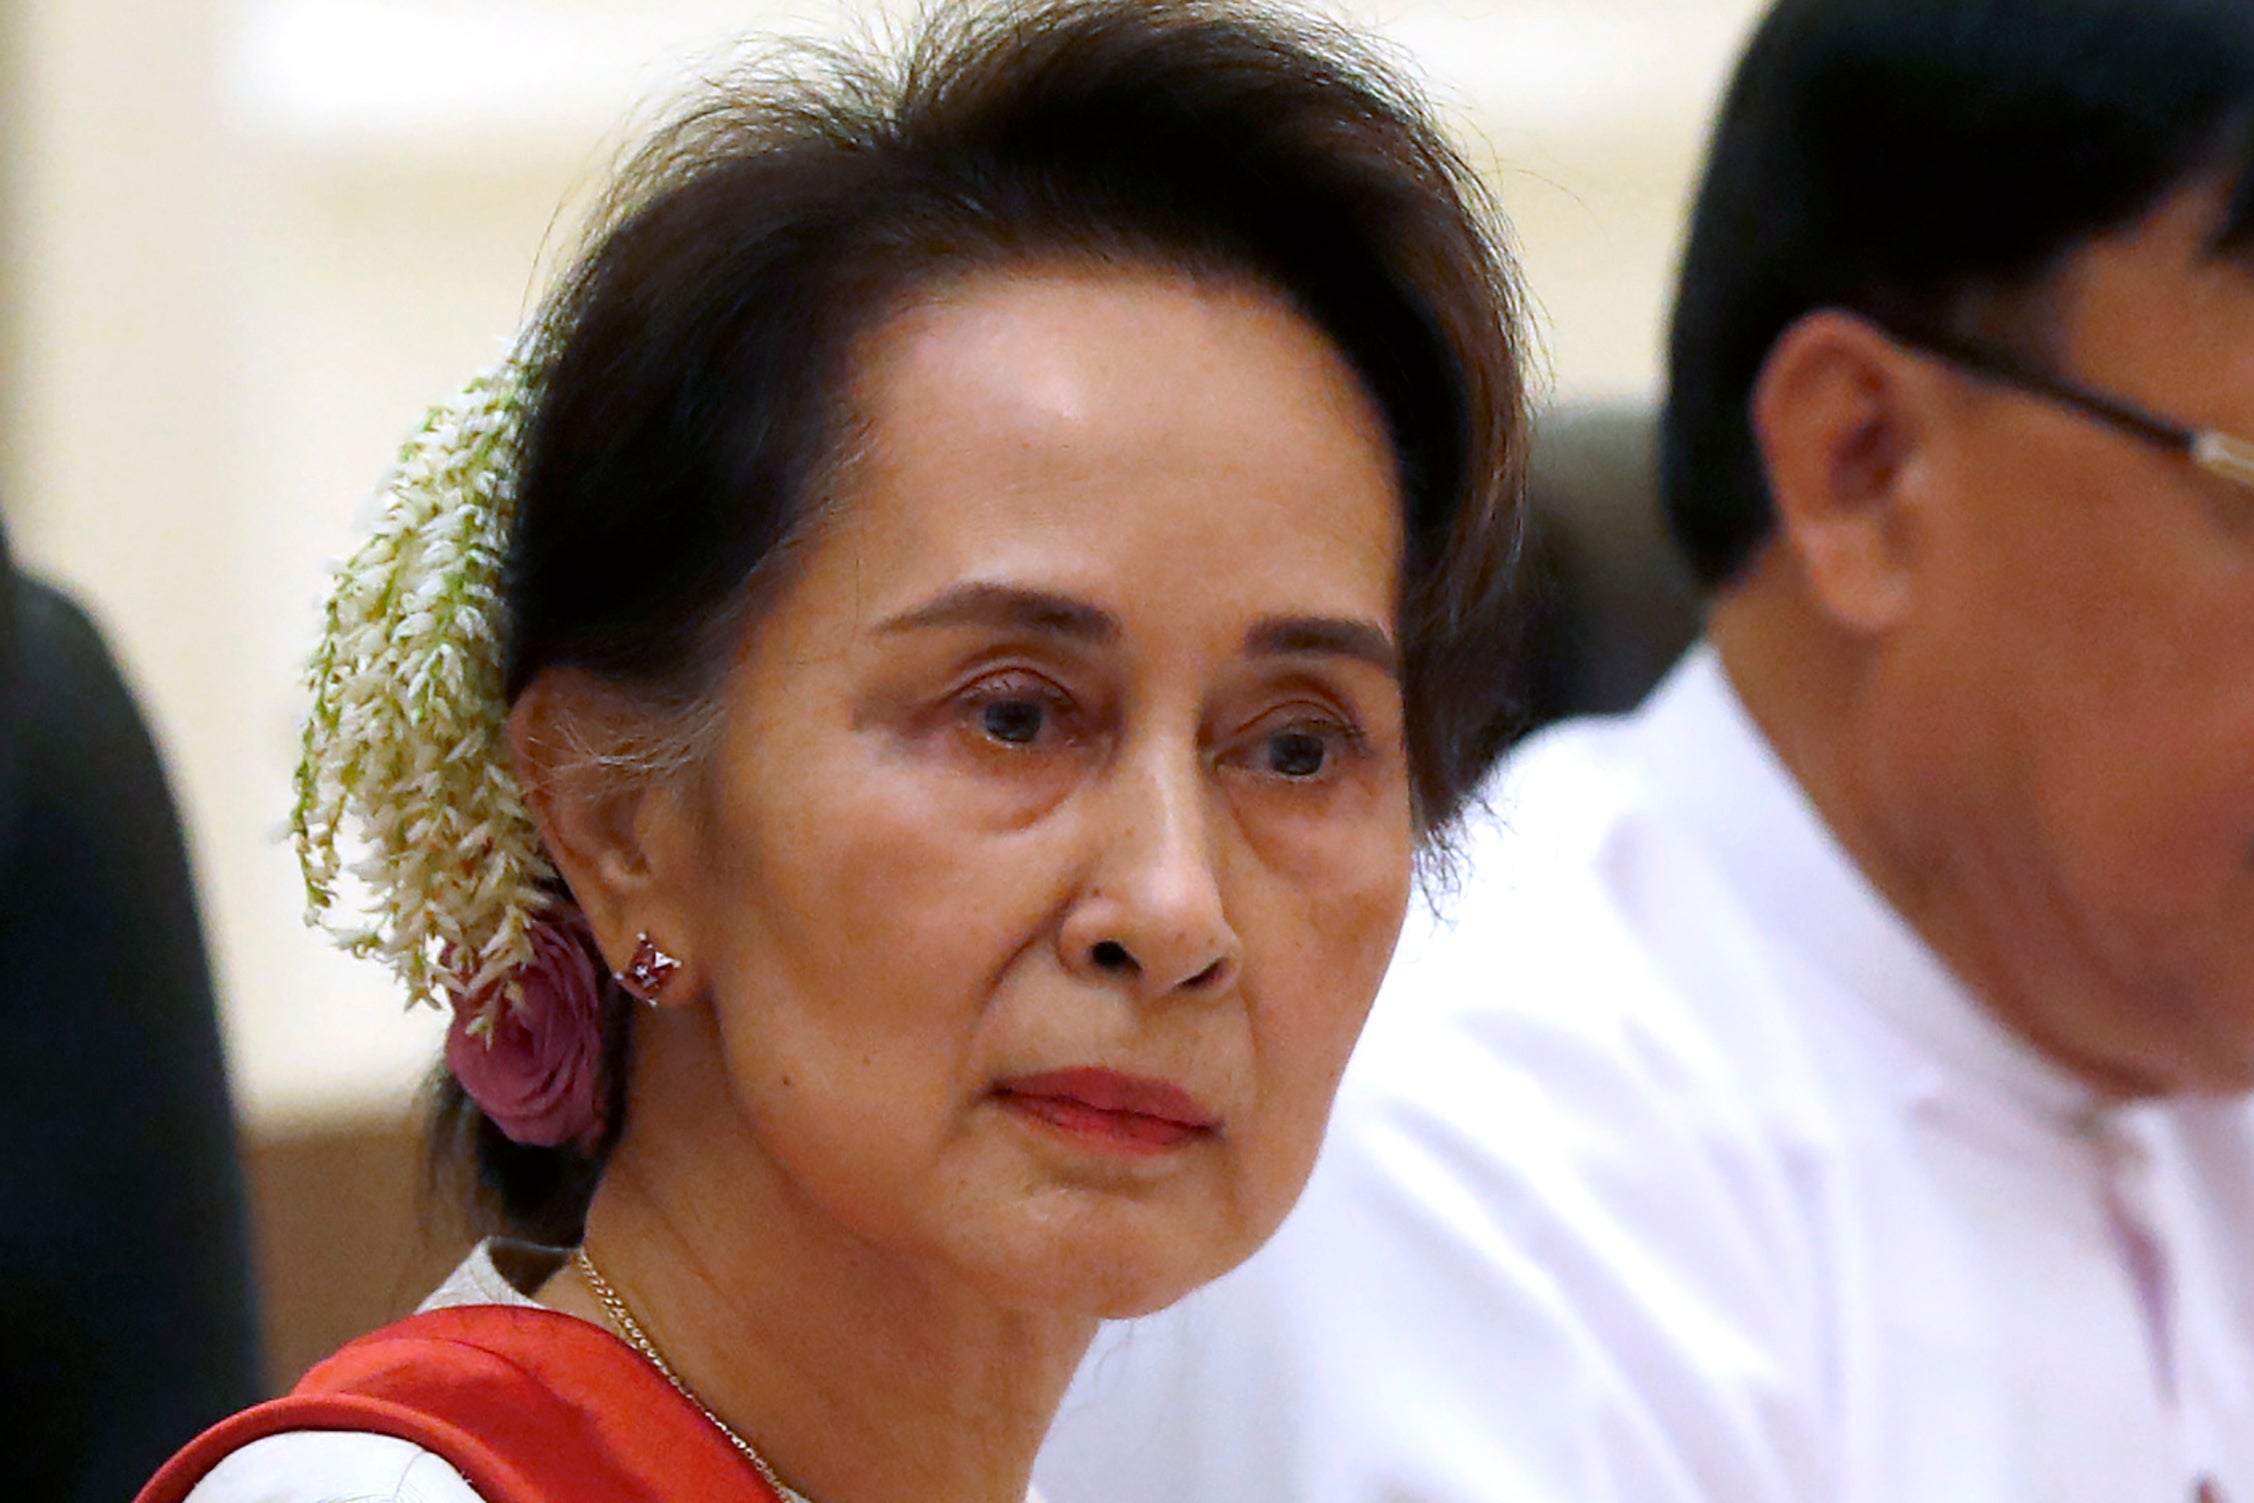 Thailand’s foreign minister Don Pramudwinai said he met Myanmar’s jailed former leader Aung San Suu Kyi